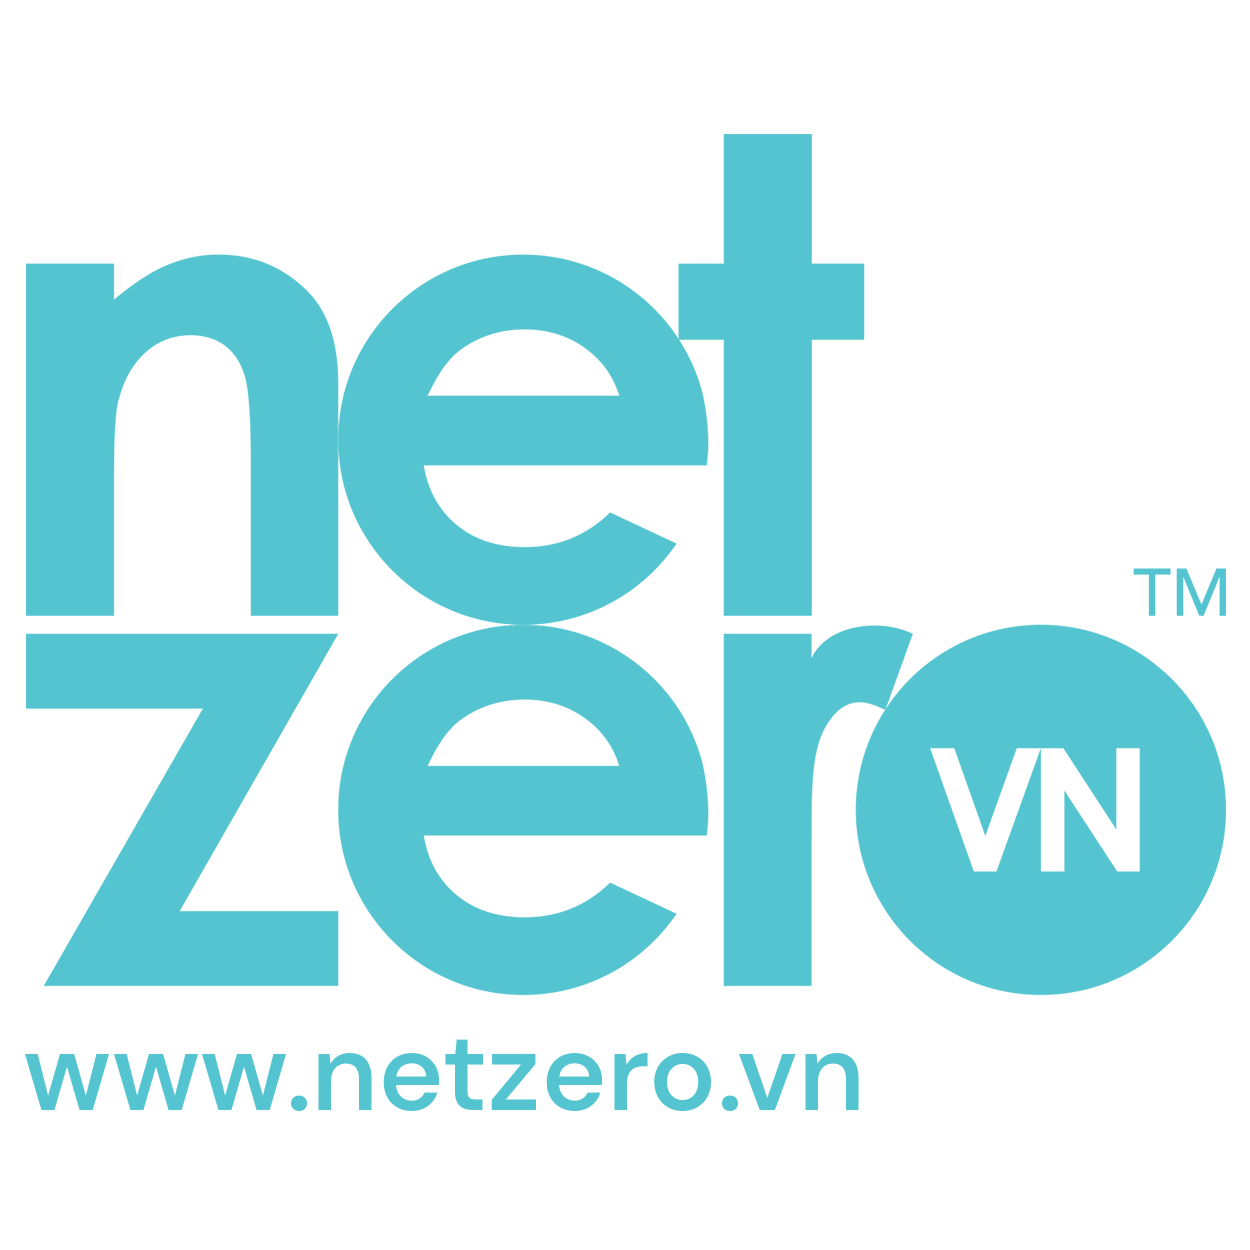 NetZero.VN - Net Zero VietNam